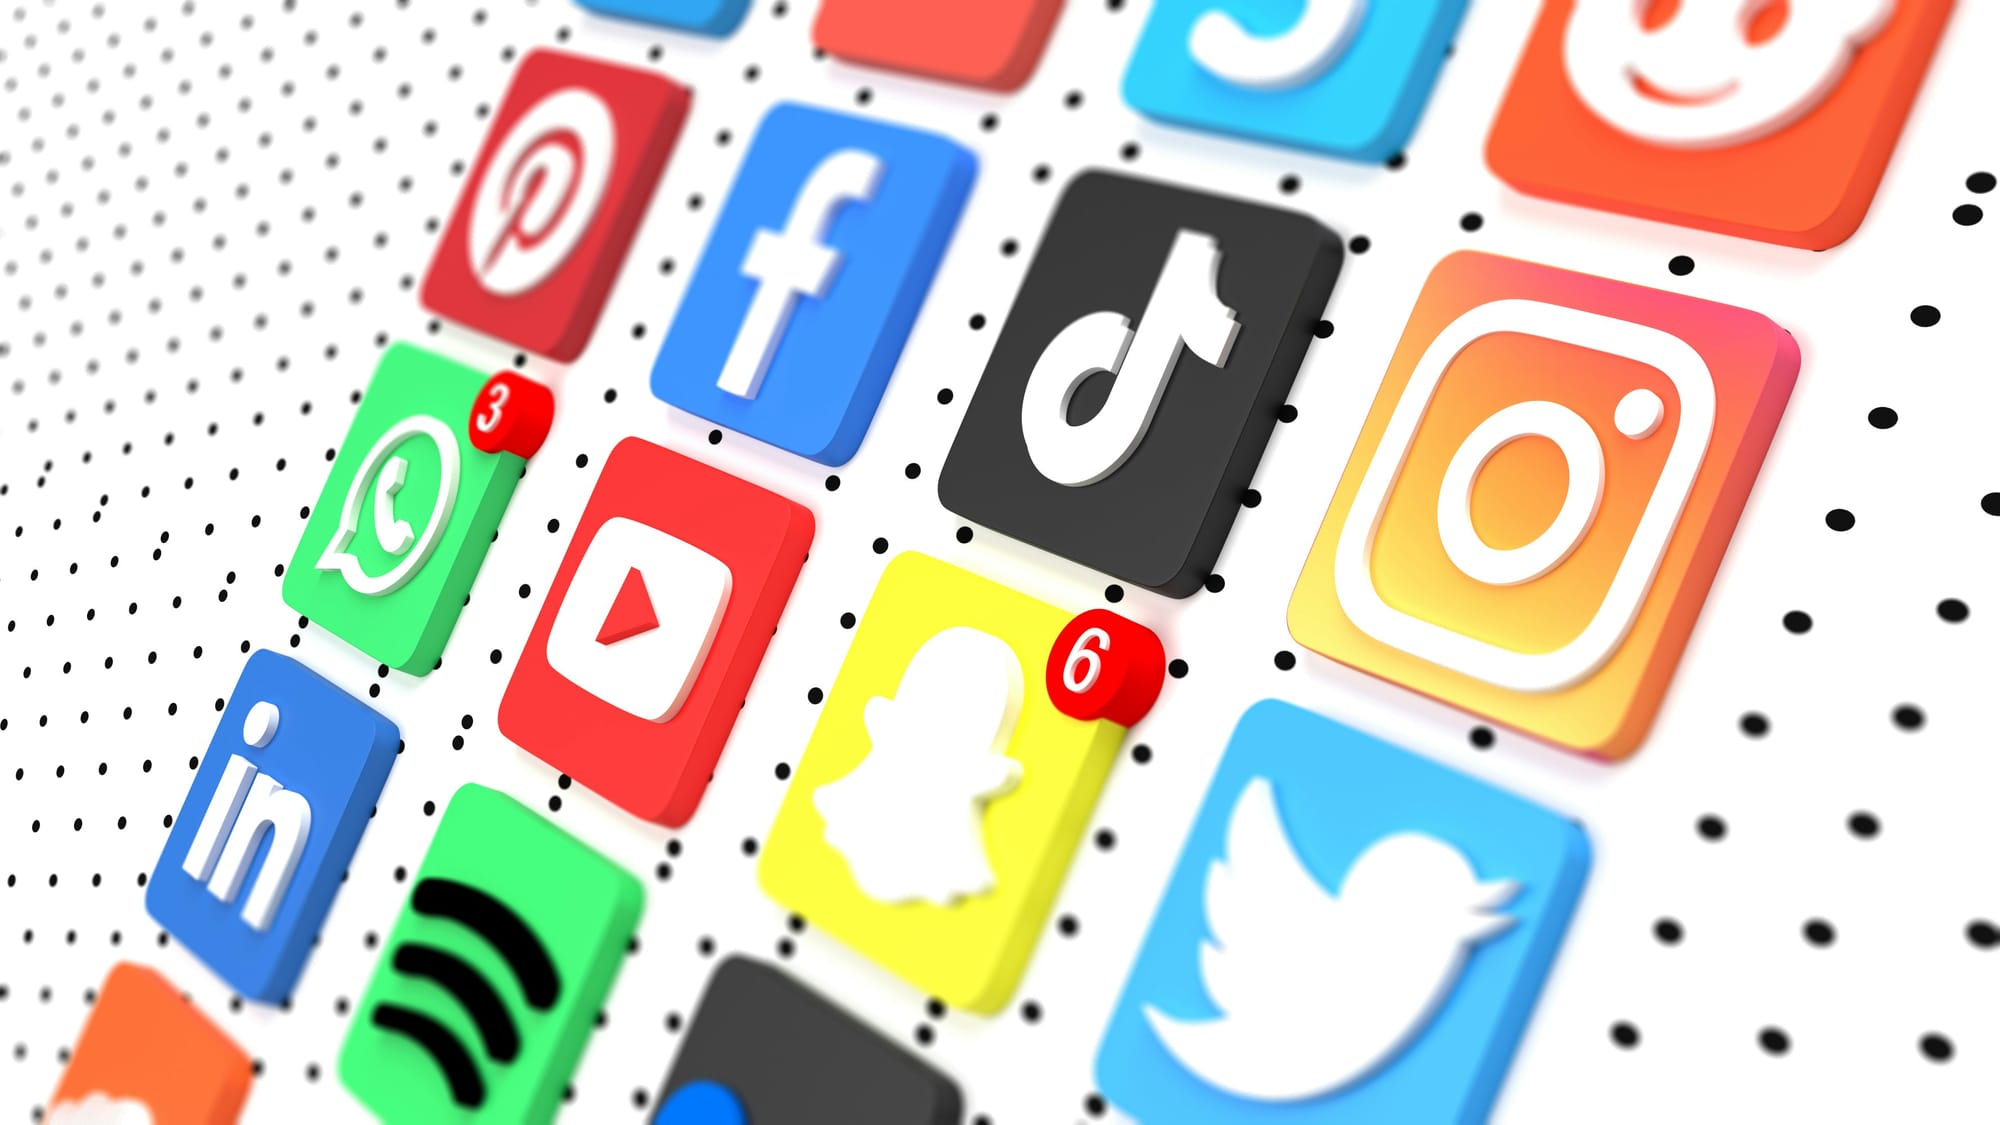 Social Media popular apps and logos - AI Social Media Content Creation